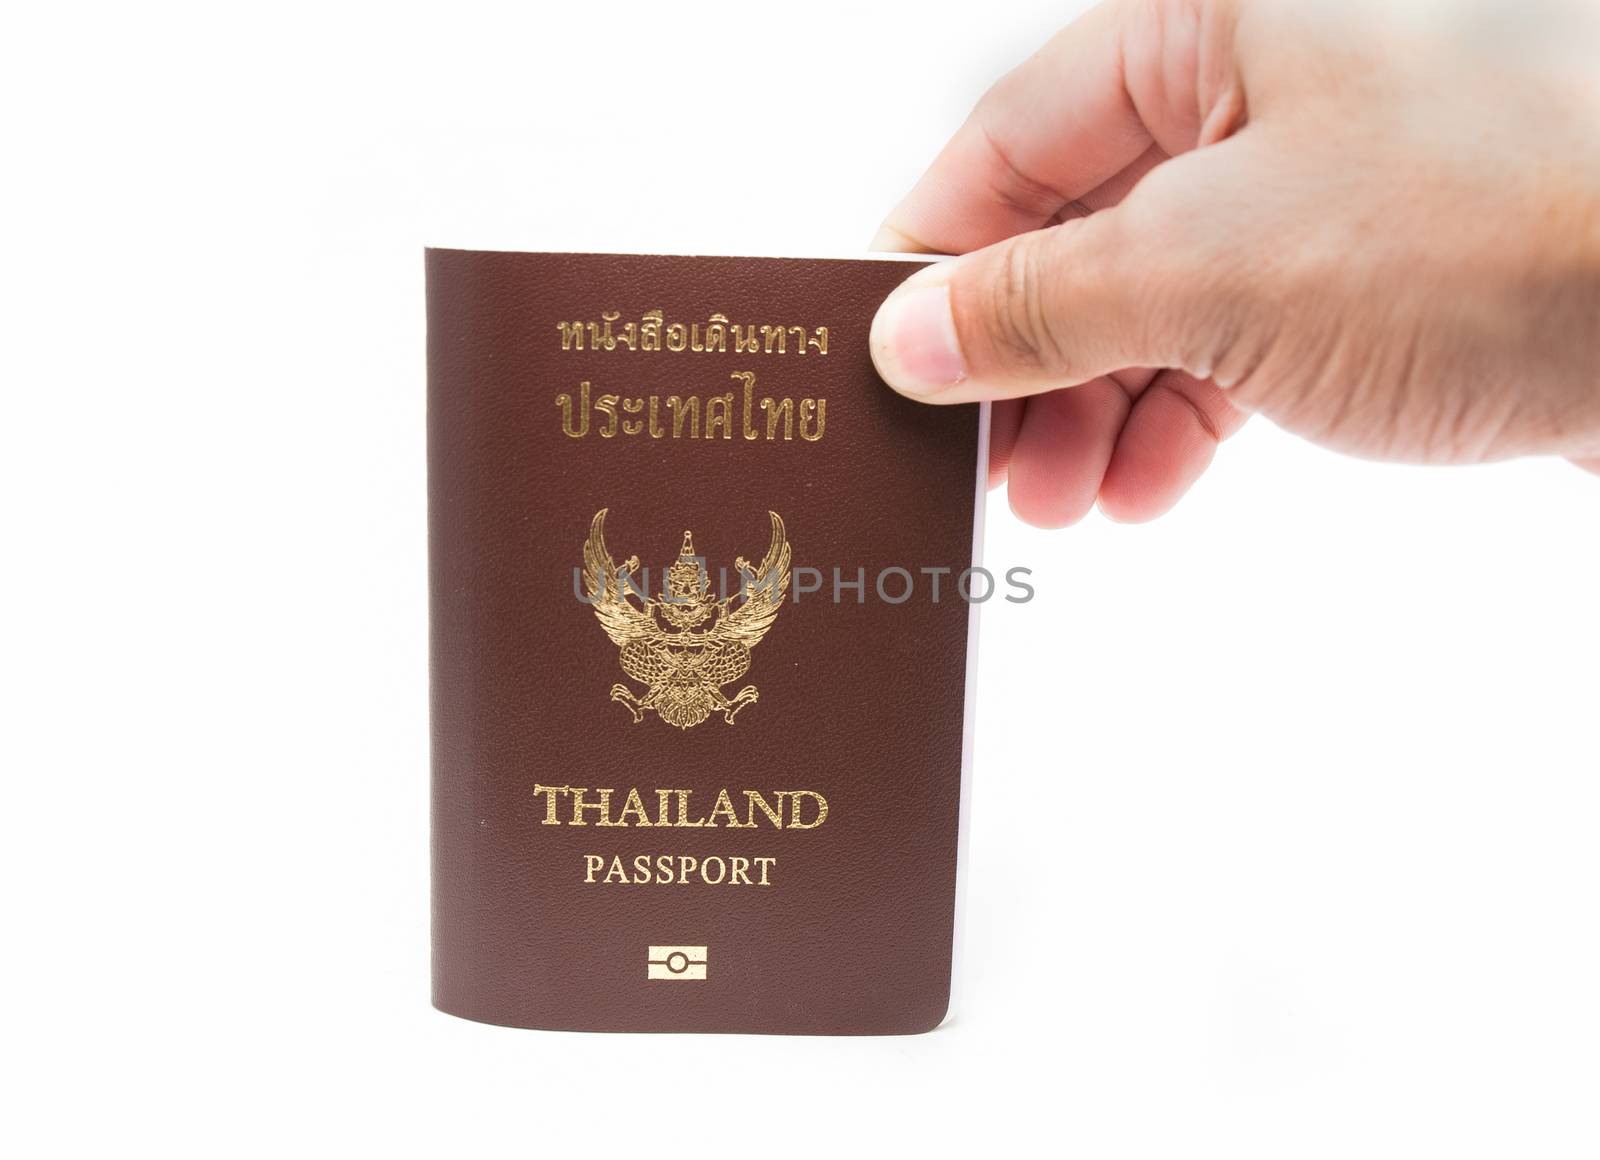 Thailand ID passport isolaye on white background